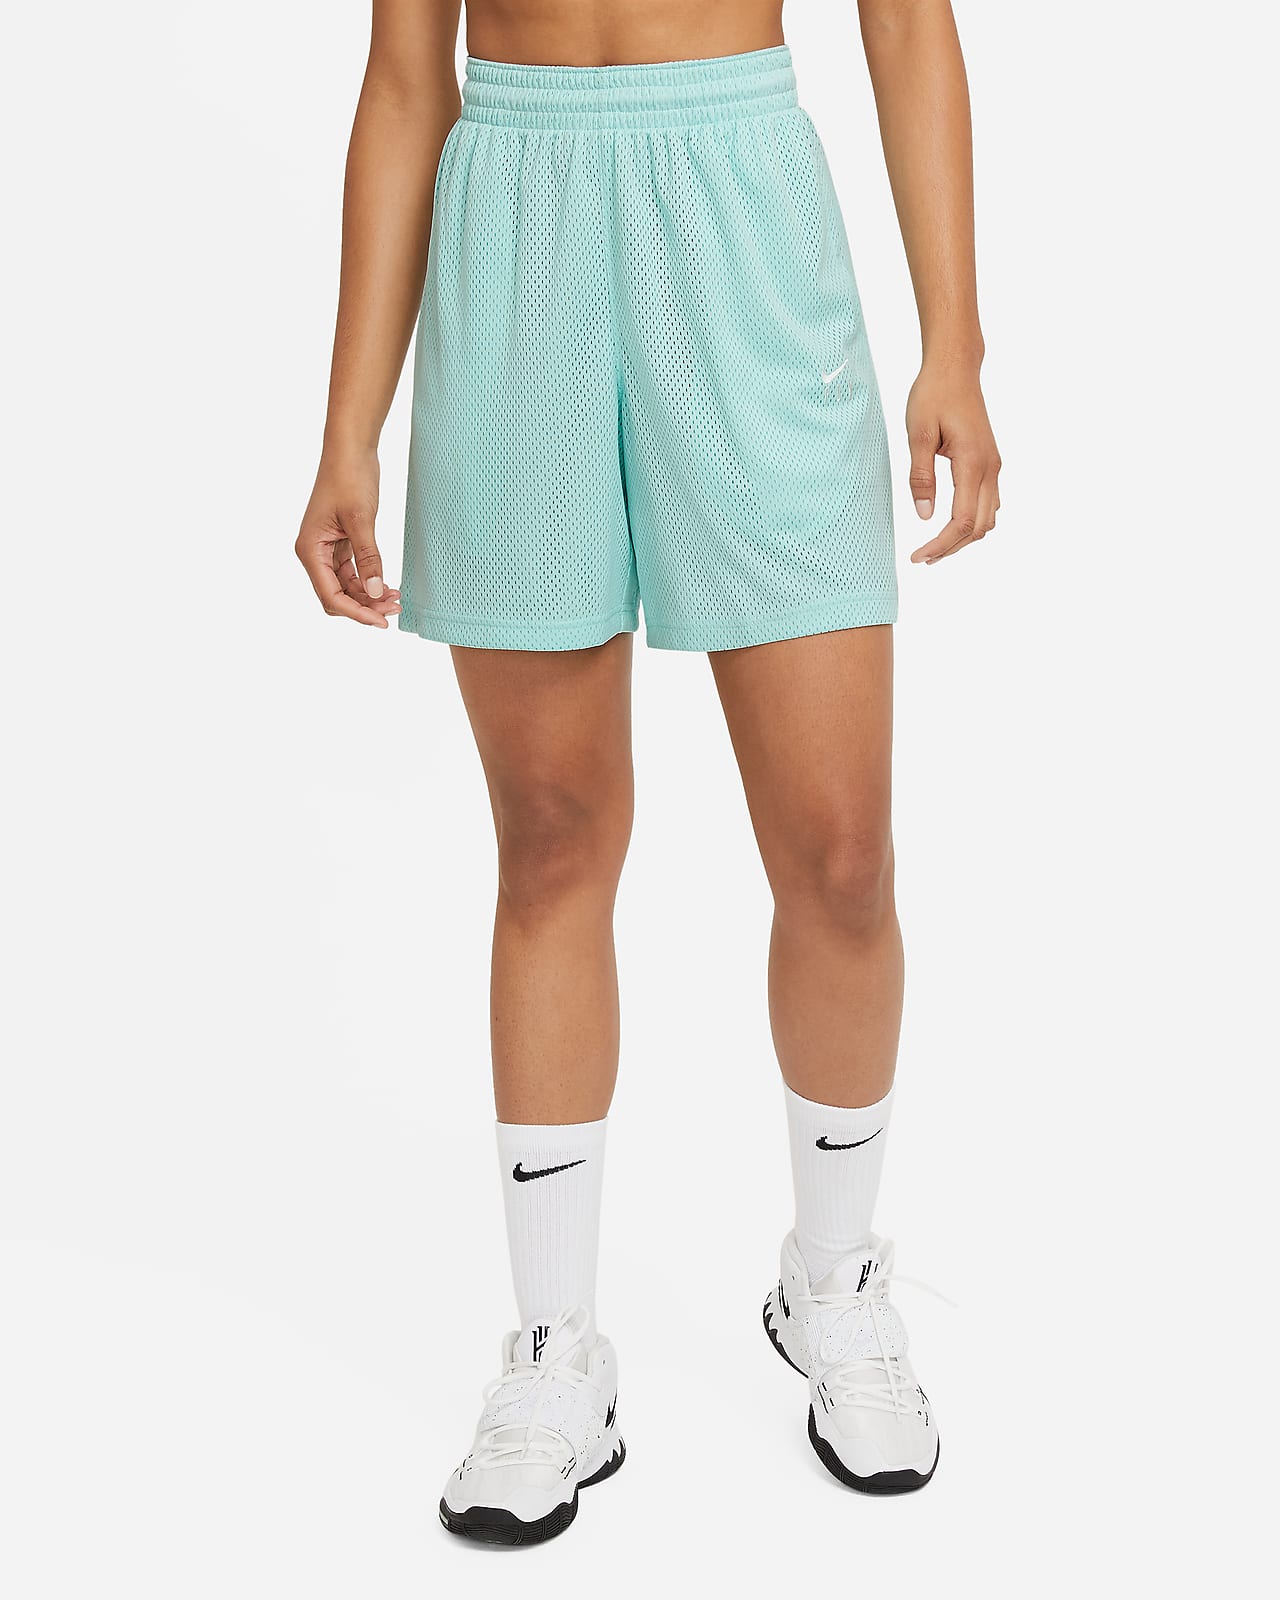 women's nike basketball shorts